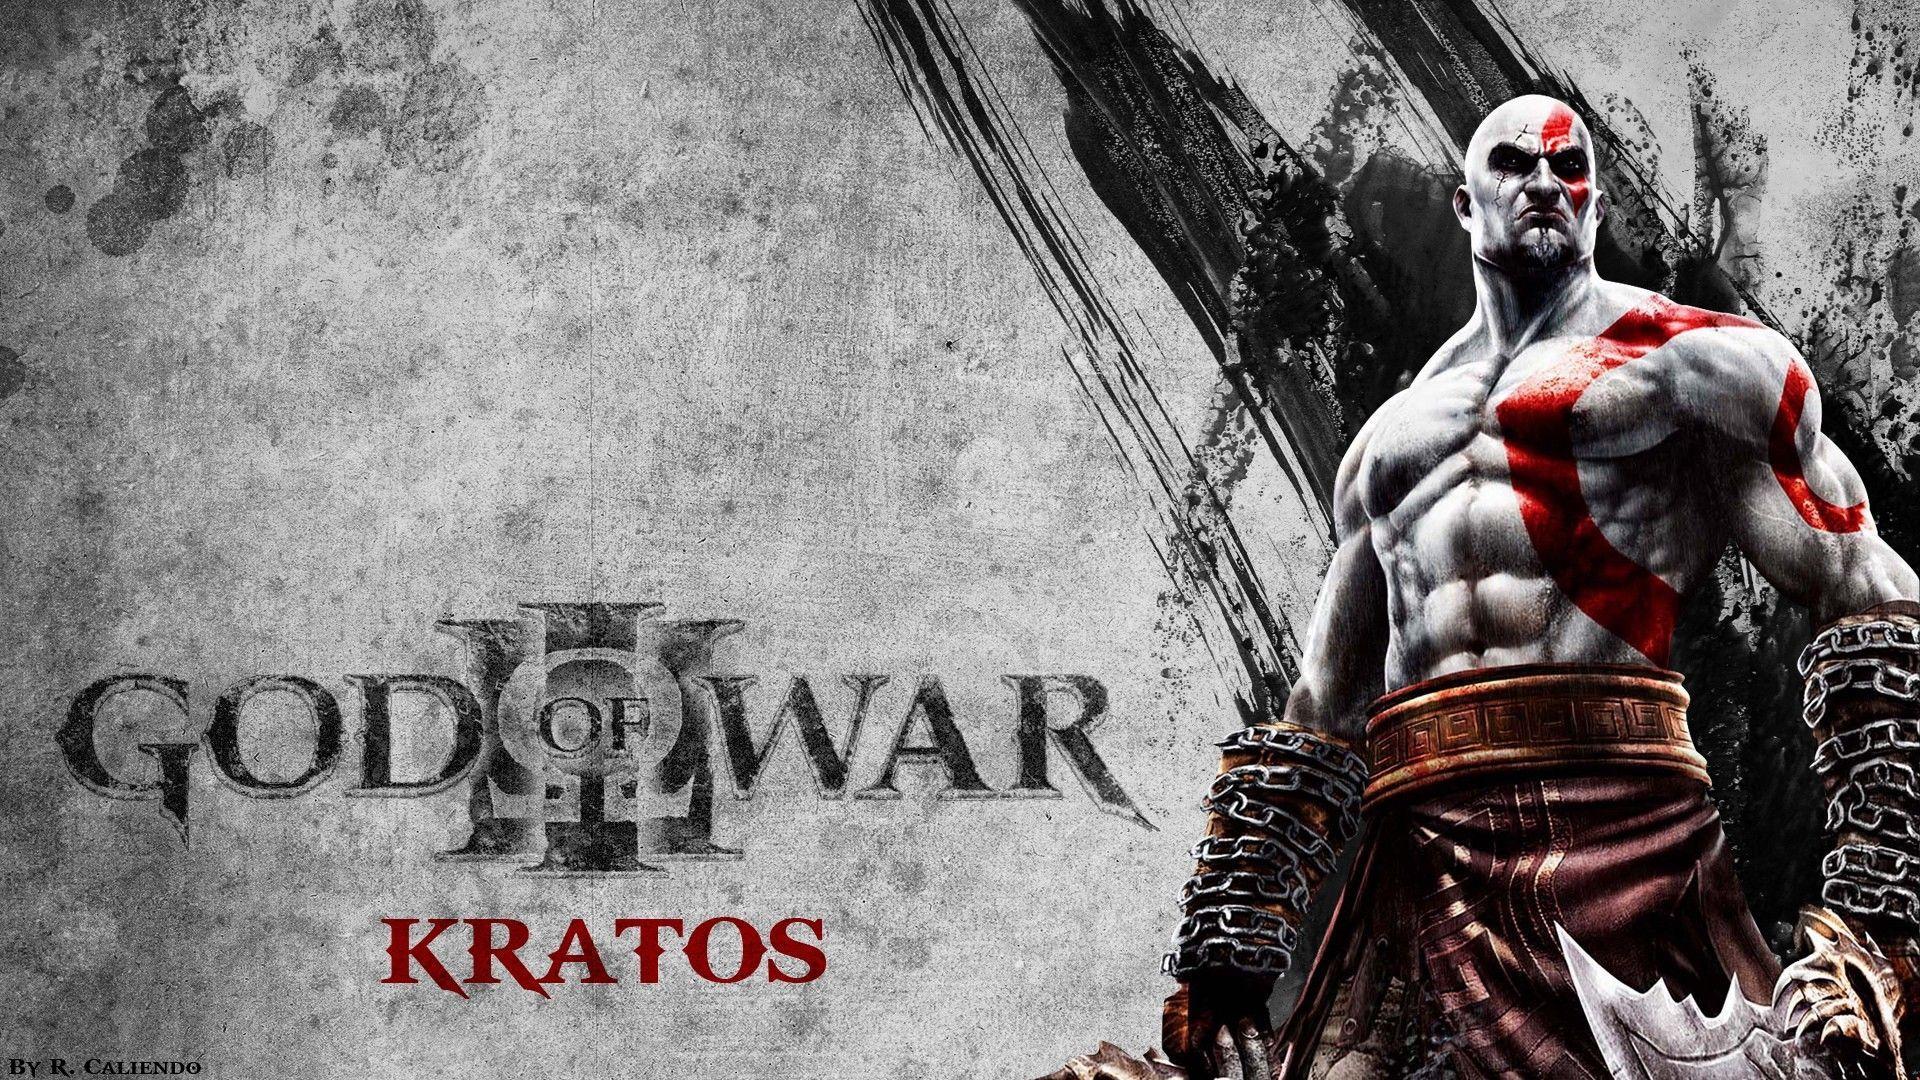 God Of War 3 Kratos Wallpaper Full HD rR. Kratos